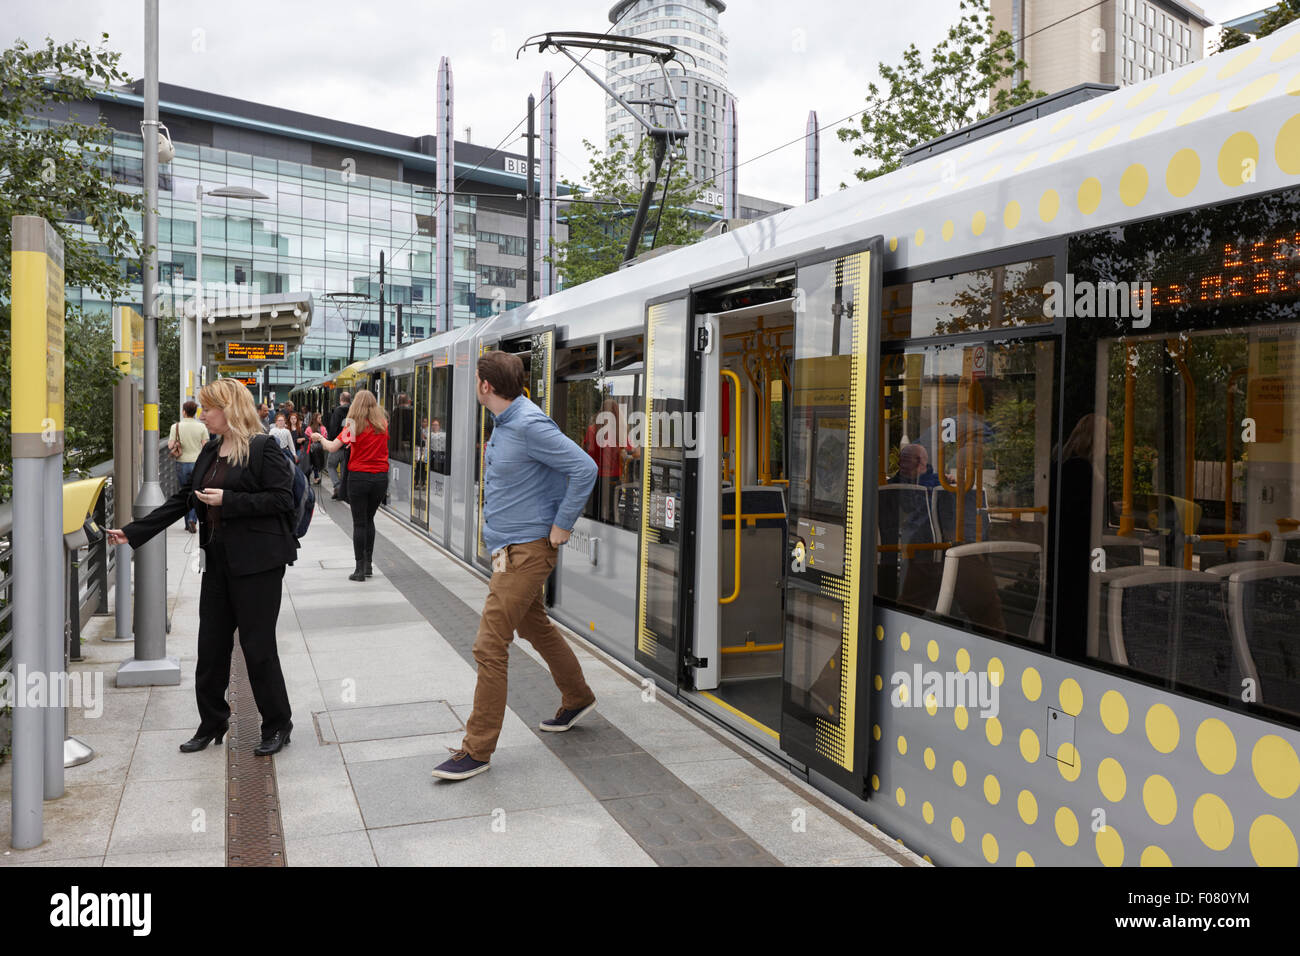 passengers and metrolink trams at mediacity station Manchester uk Stock Photo